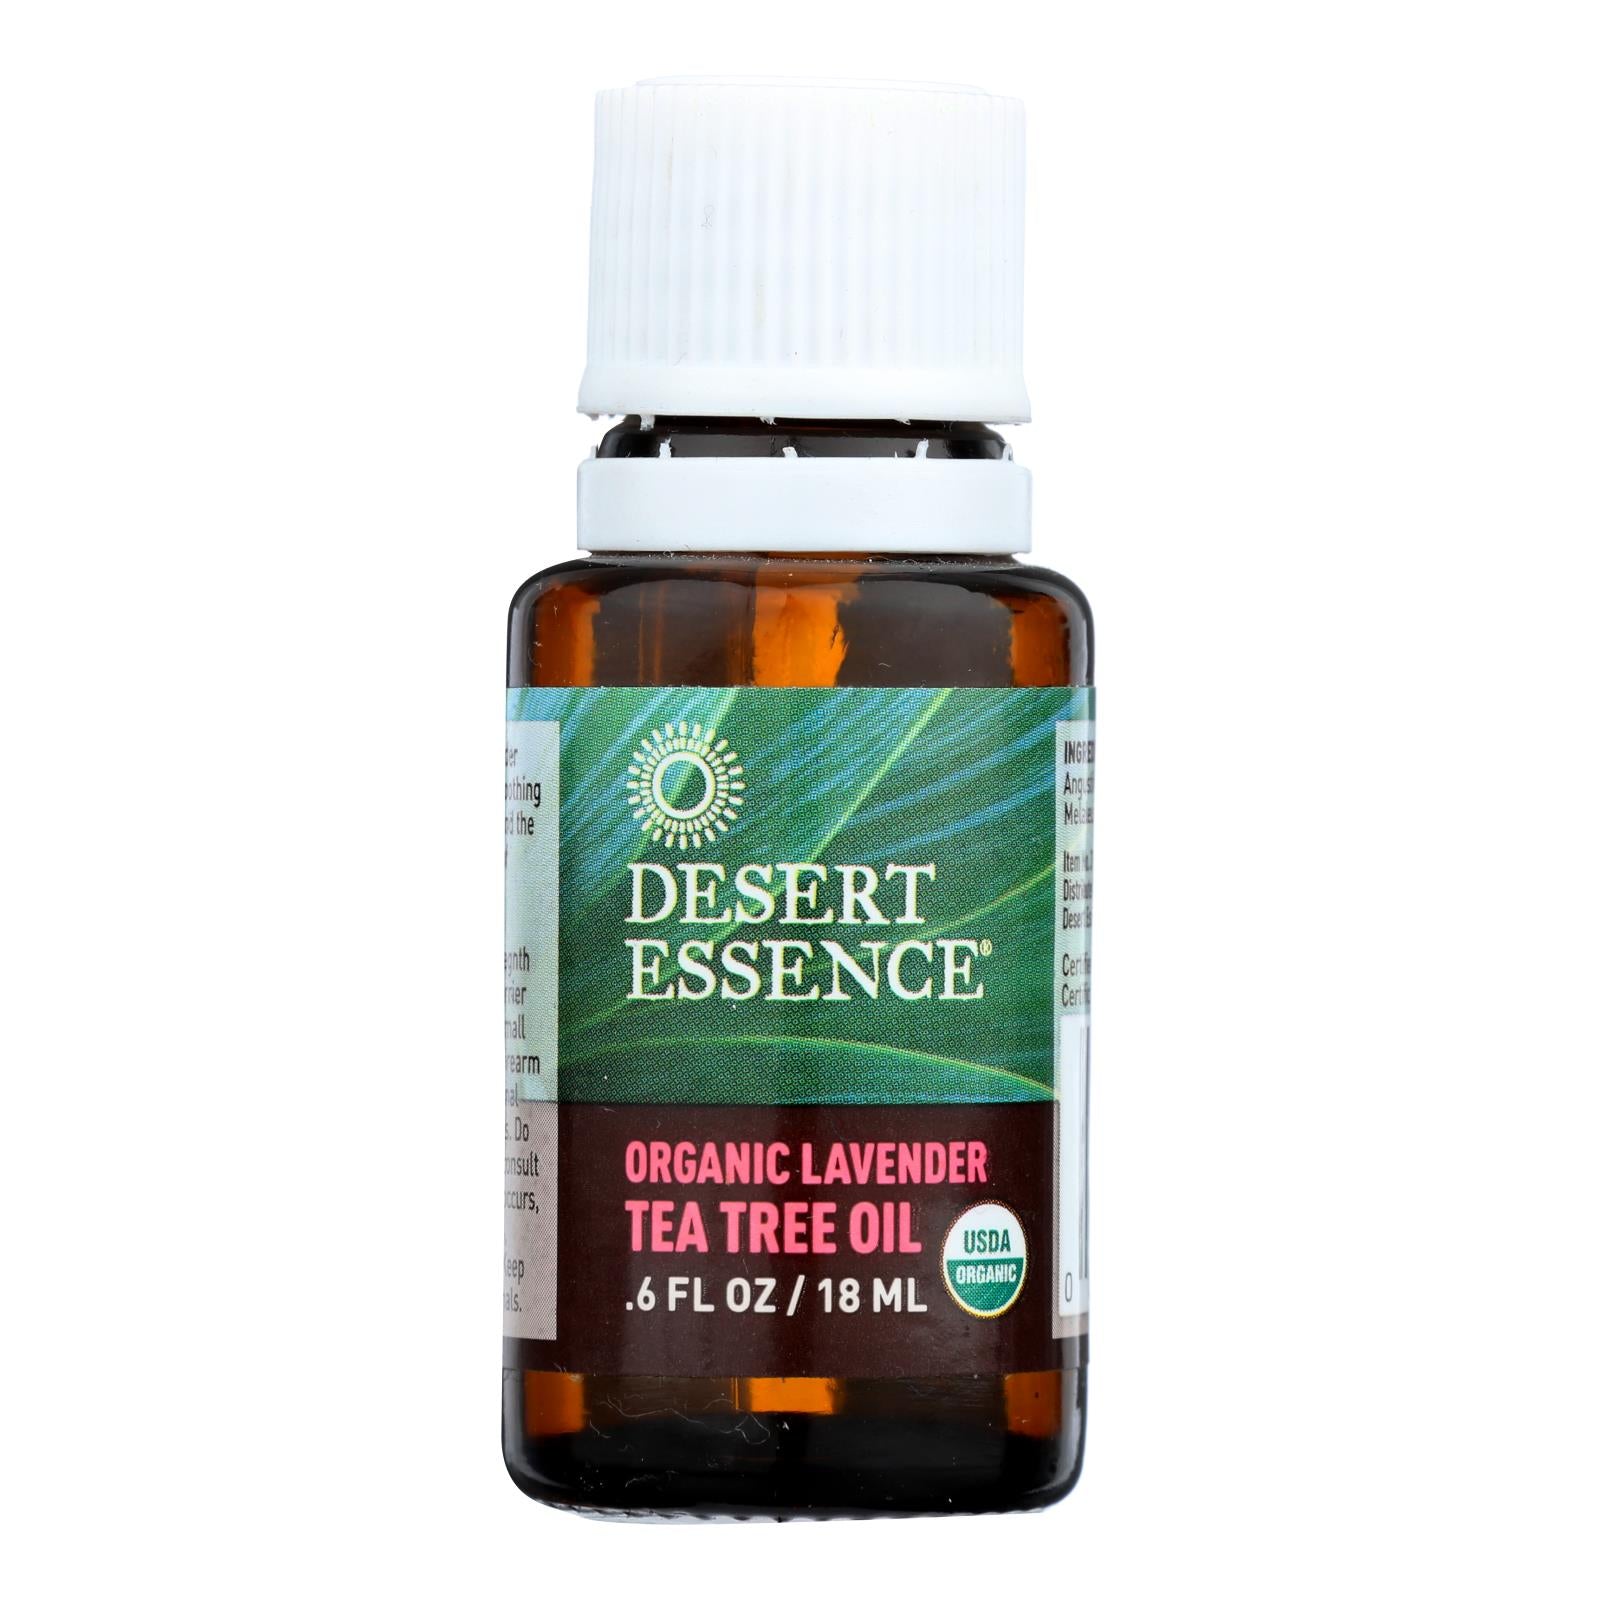 Desert Essence - Tea Tree Oil Lavender - 1 Each -.5 Fluid Ounce